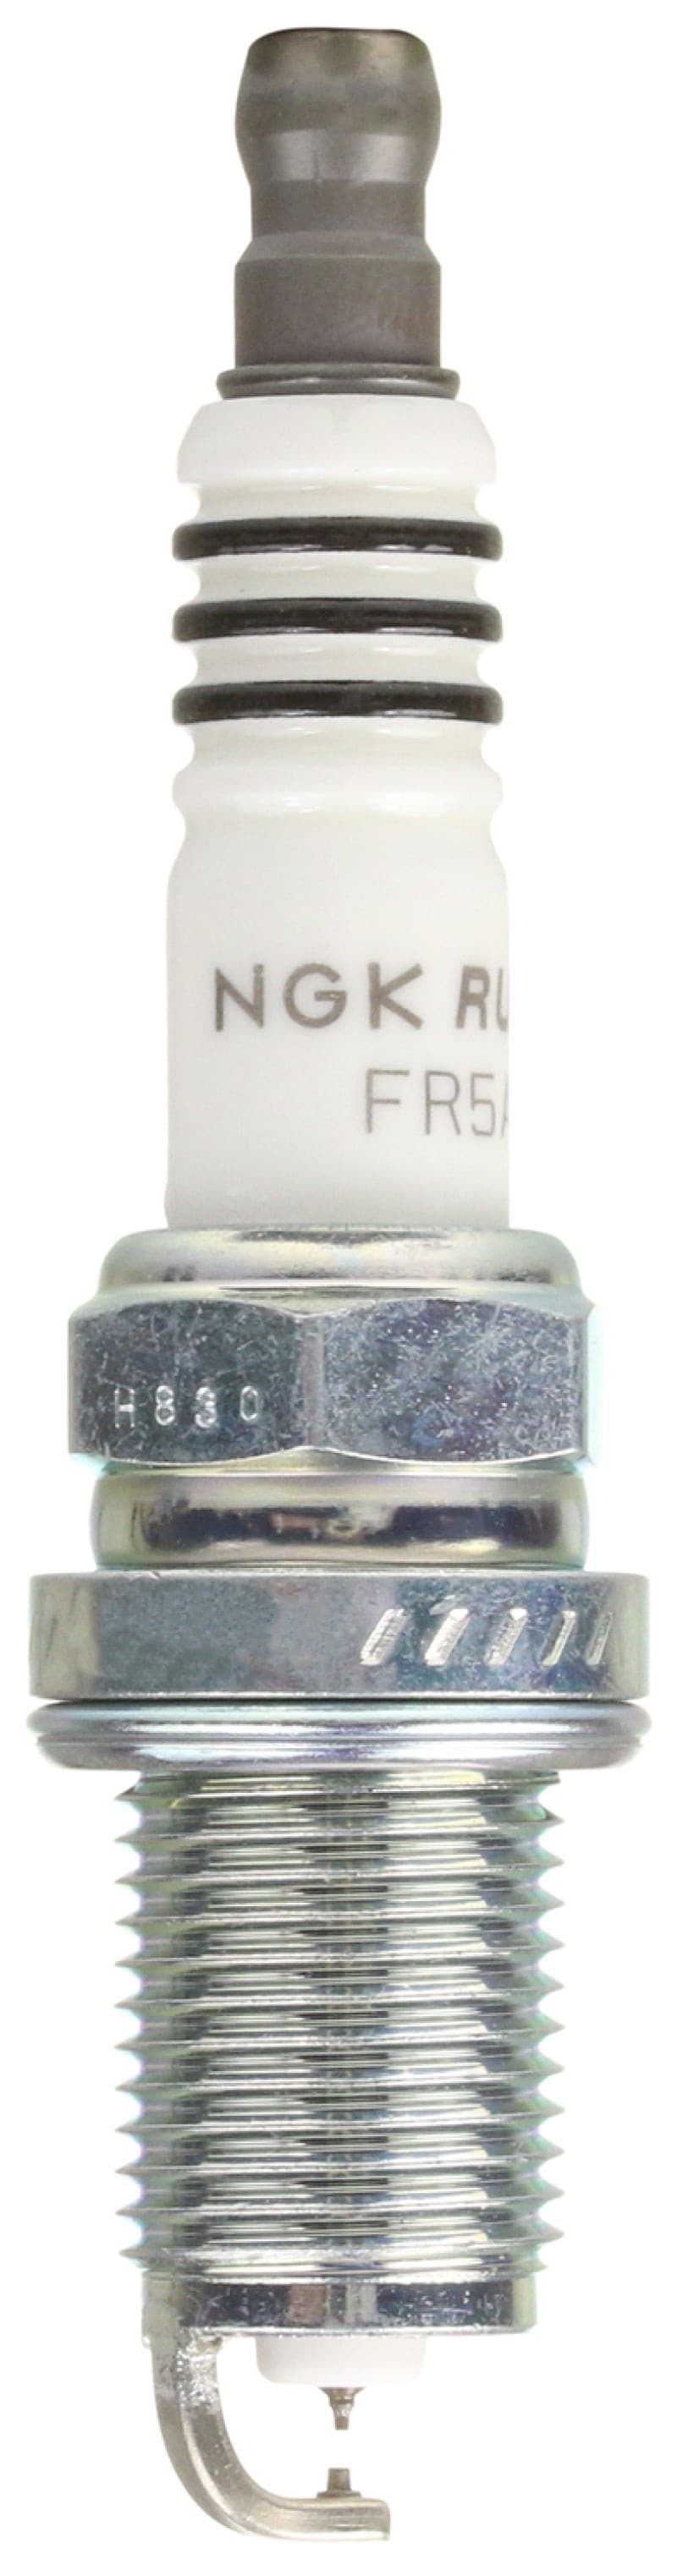 NGK Ruthenium HX Spark Plug Box of 4 (FR5AHX).